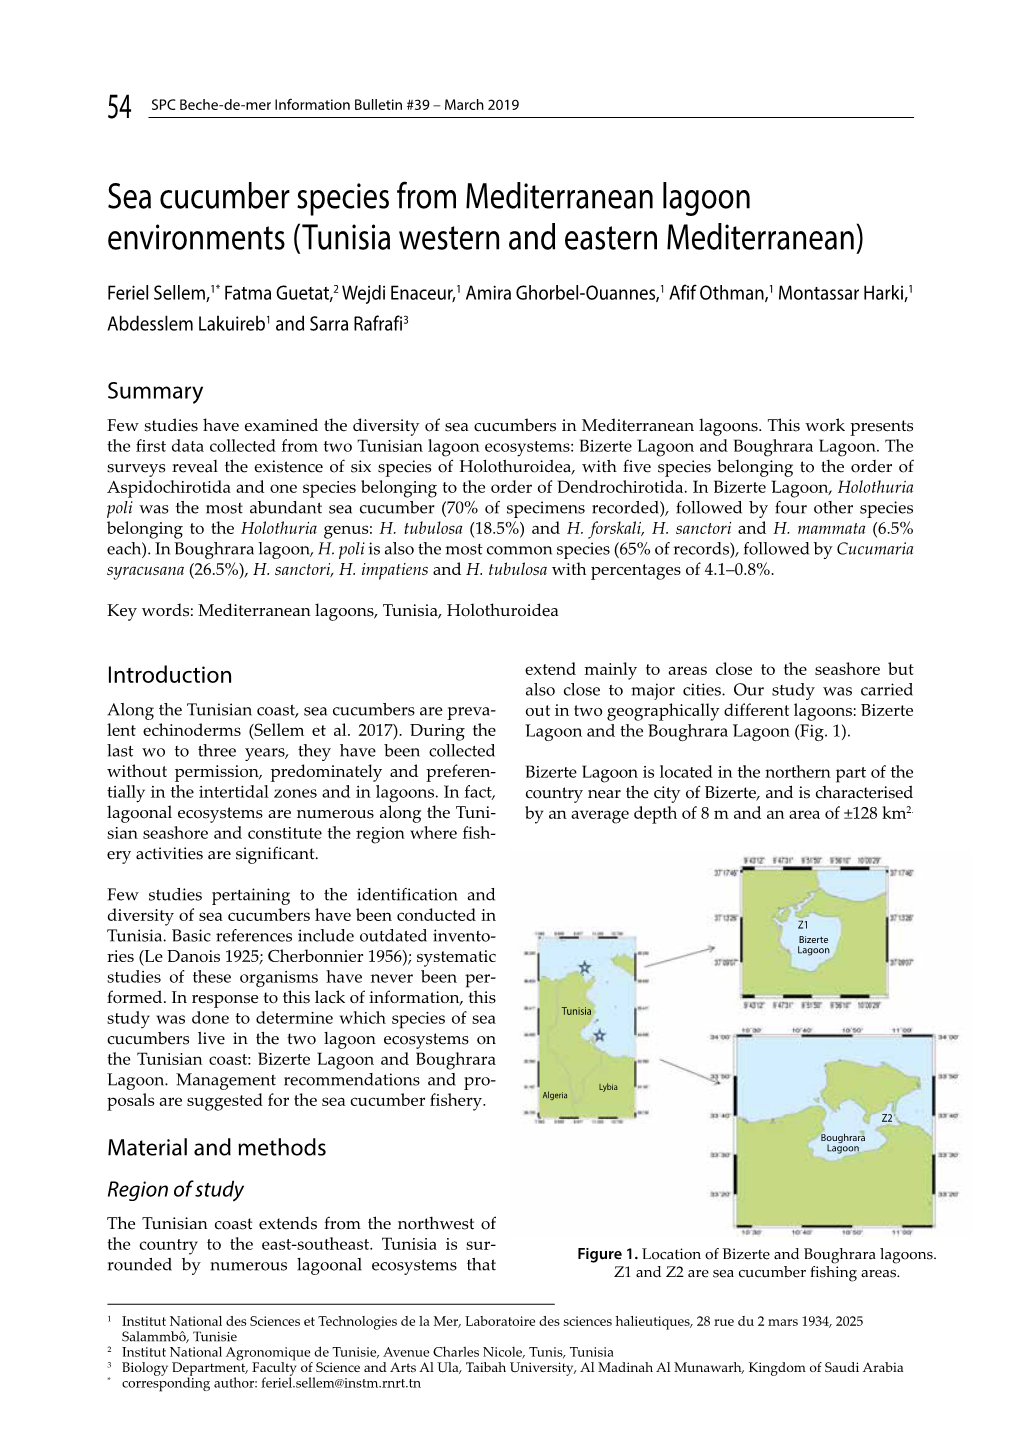 Sea Cucumber Species from Mediterranean Lagoon Environments (Tunisia Western and Eastern Mediterranean)